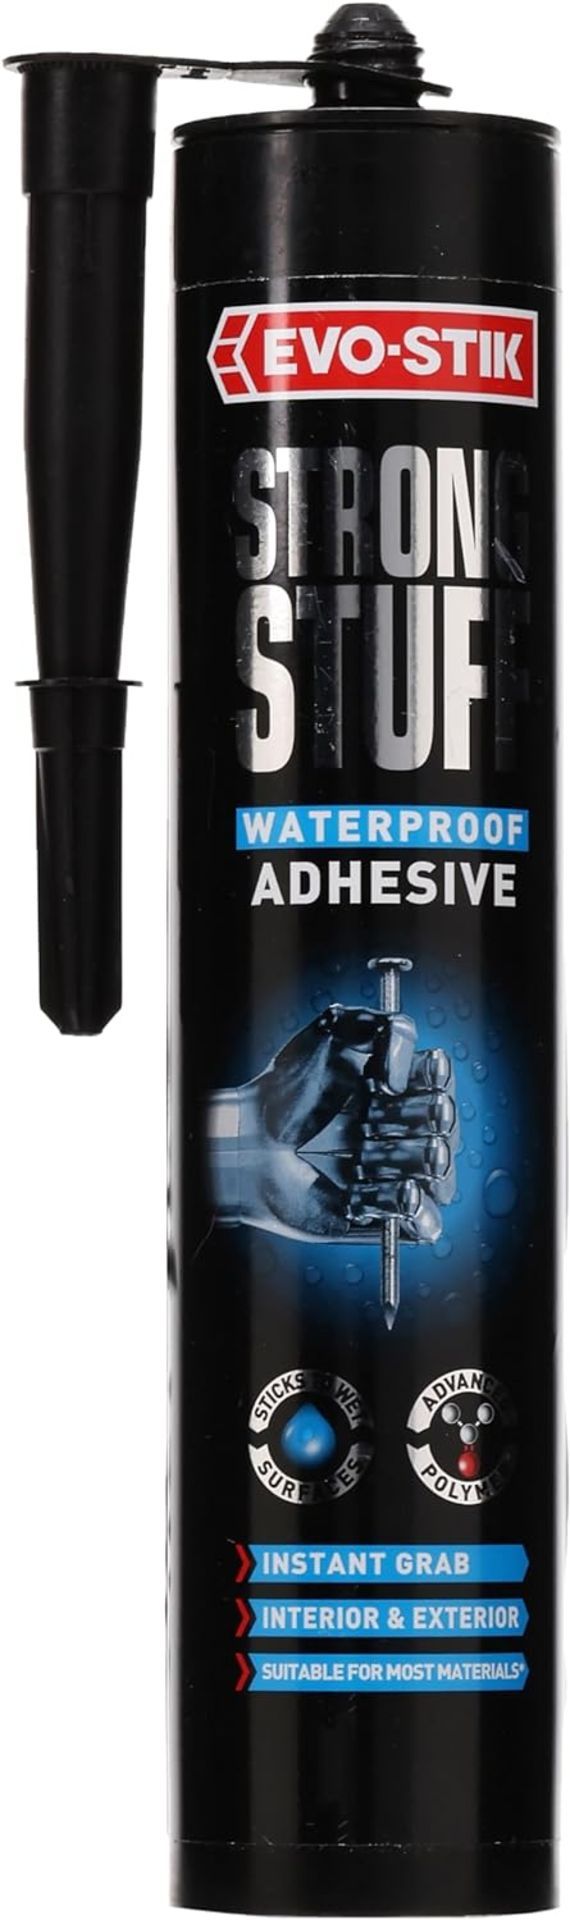 72x BRAND NEW EVO-STIK Strong Stuff Waterproof Adhesive 290ml R1-6. RRP £11.99 EACH. (R1/5/6). EVO-